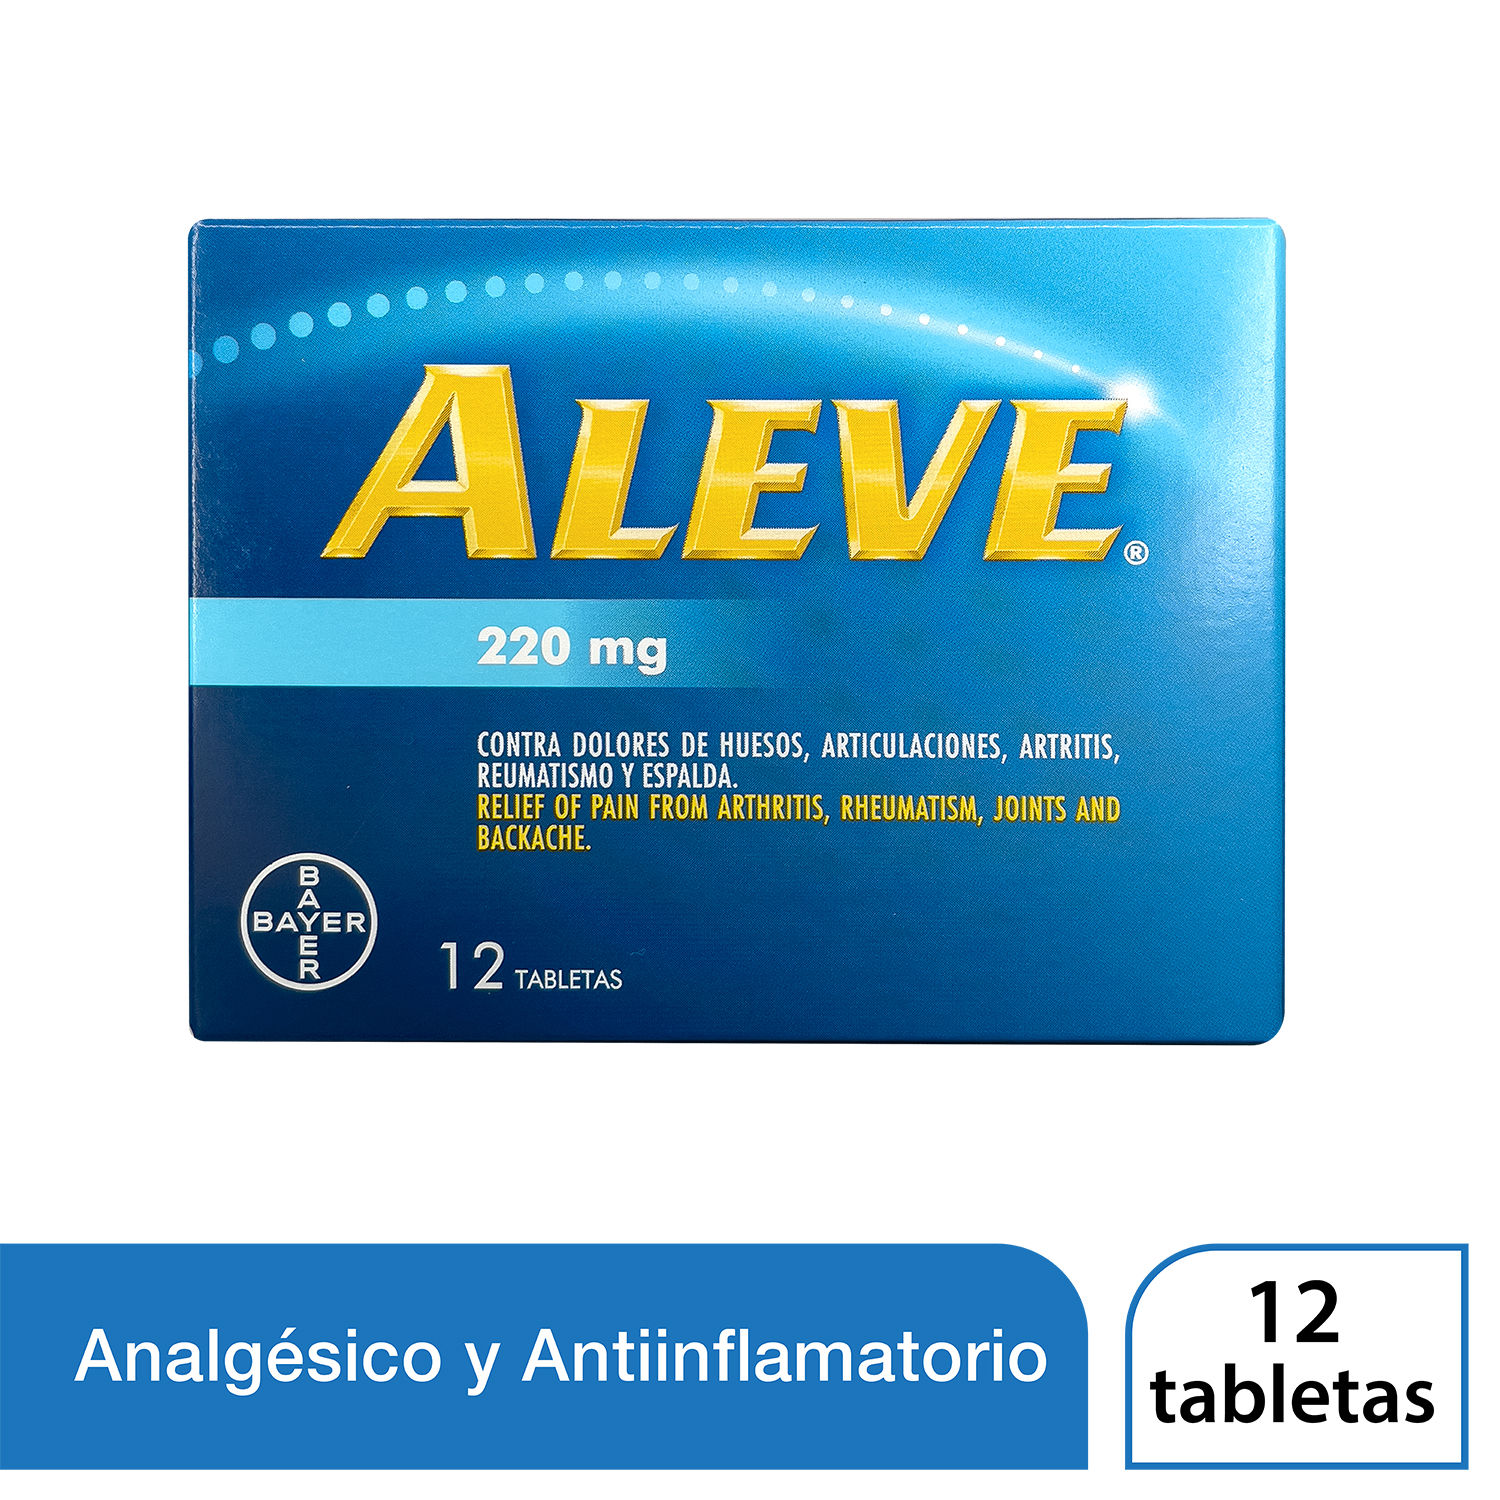 Analgesico Tableta Aleve Adulto Bayer Caja 12 Unid